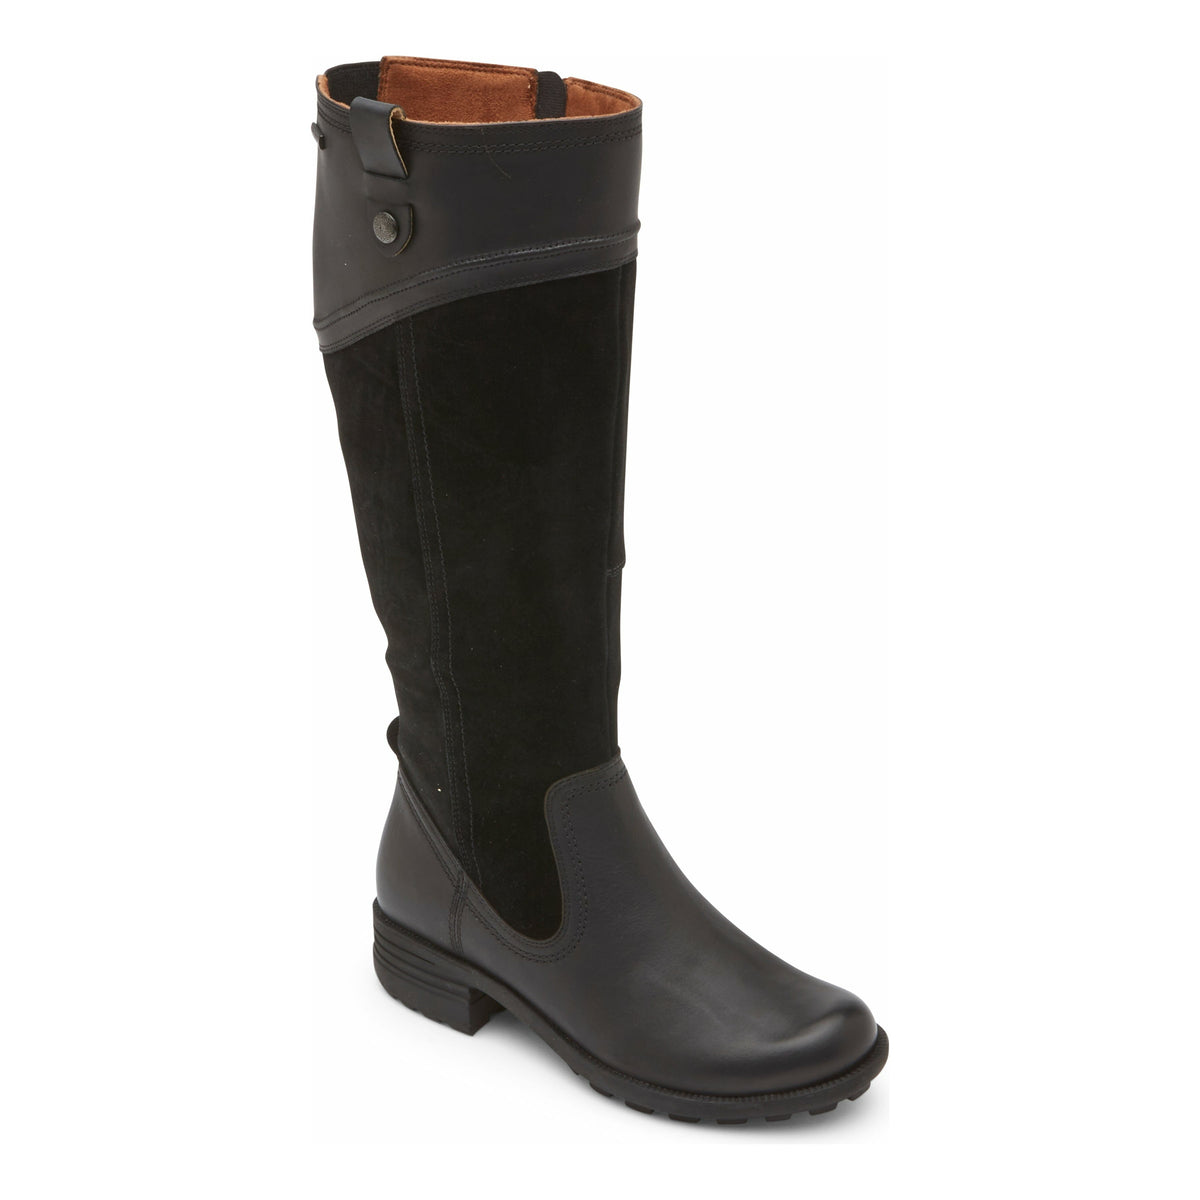 Buy Horze Aspen Women's Winter Tall Boots